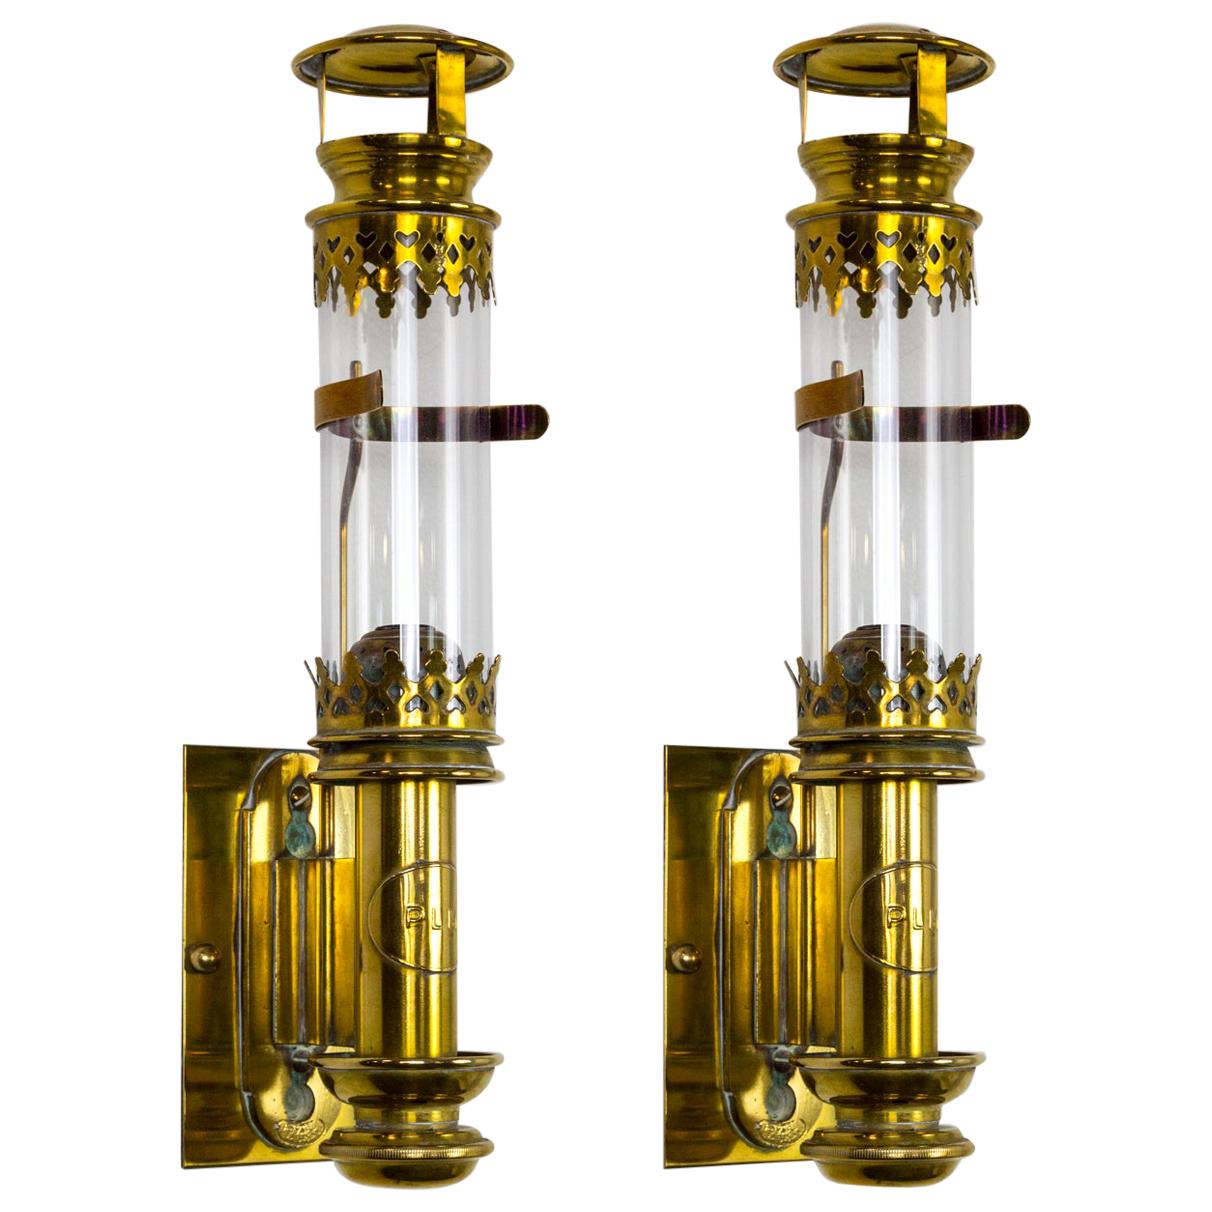 Original circa 1900 "PLM" Brass Railroad Lantern Sconces by Poyard Paris 'Pair'